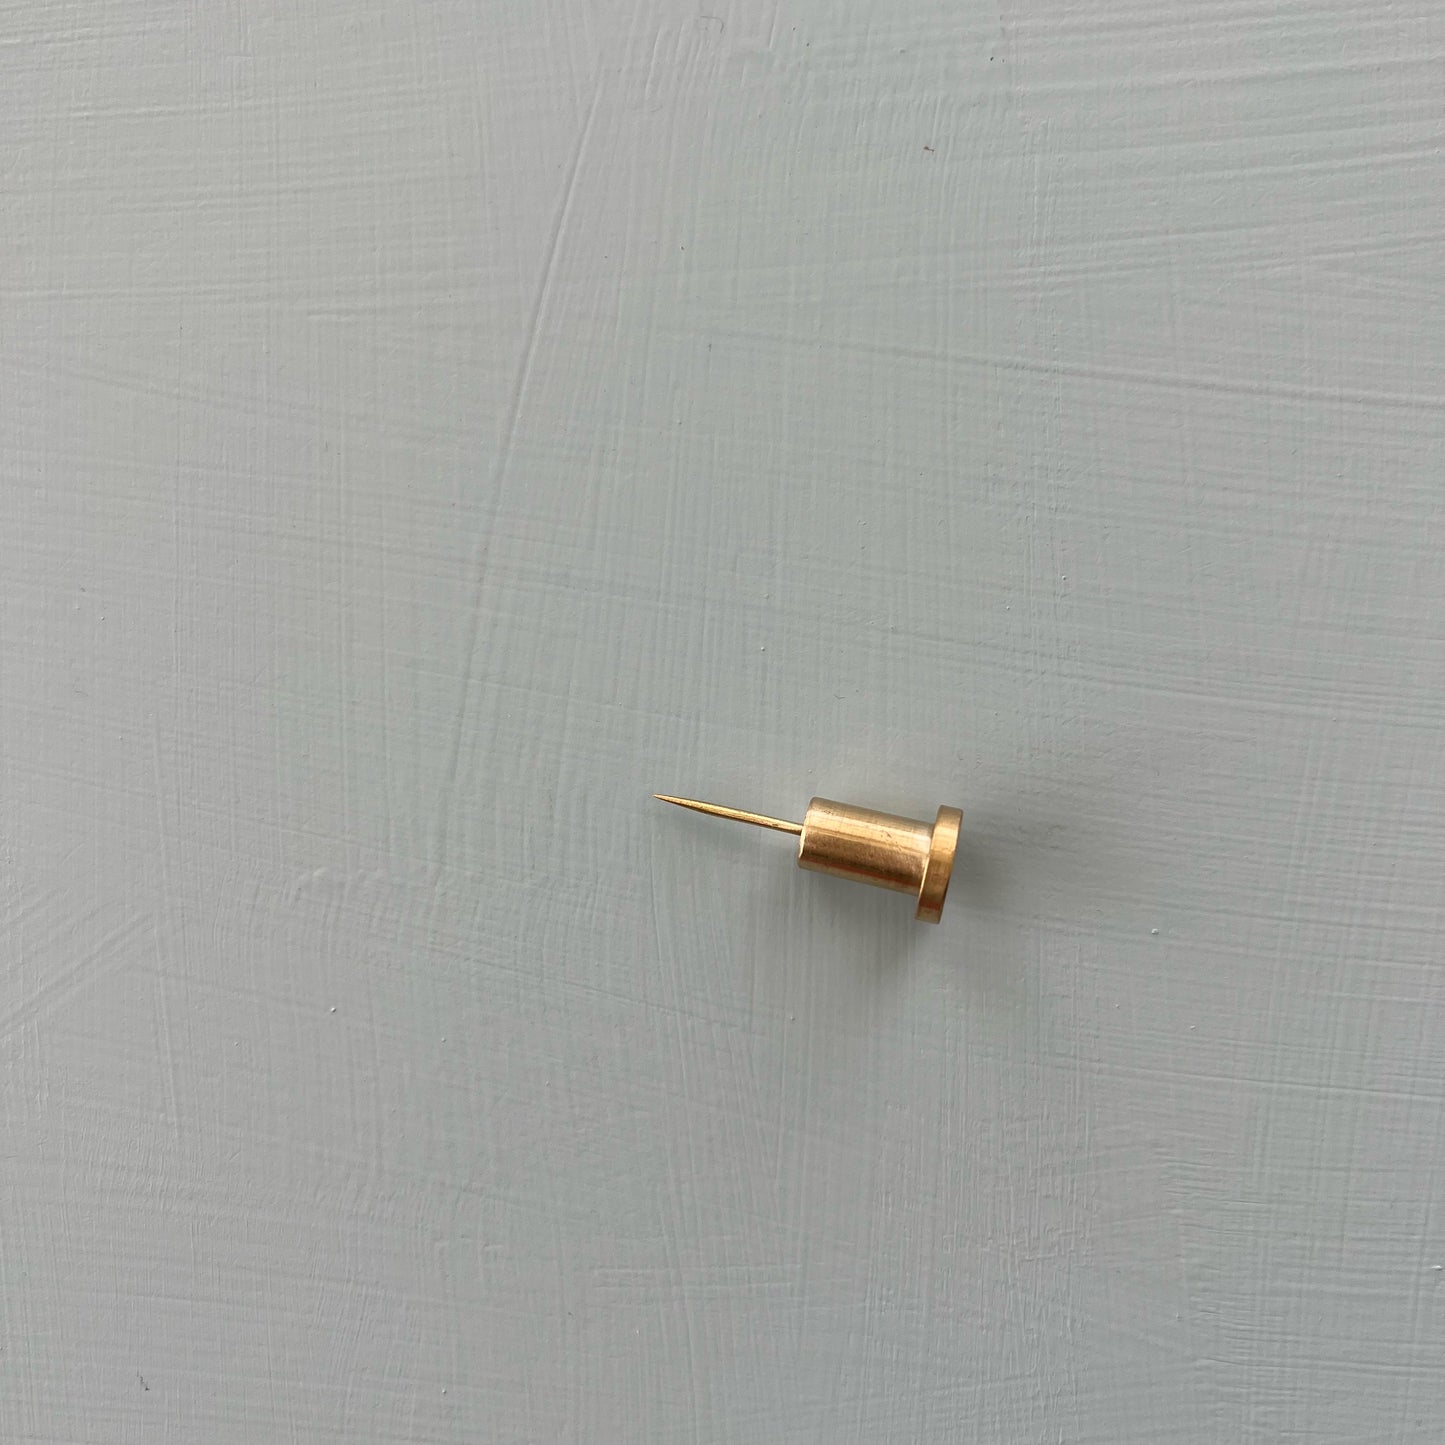 Oversized Brass Push Pin